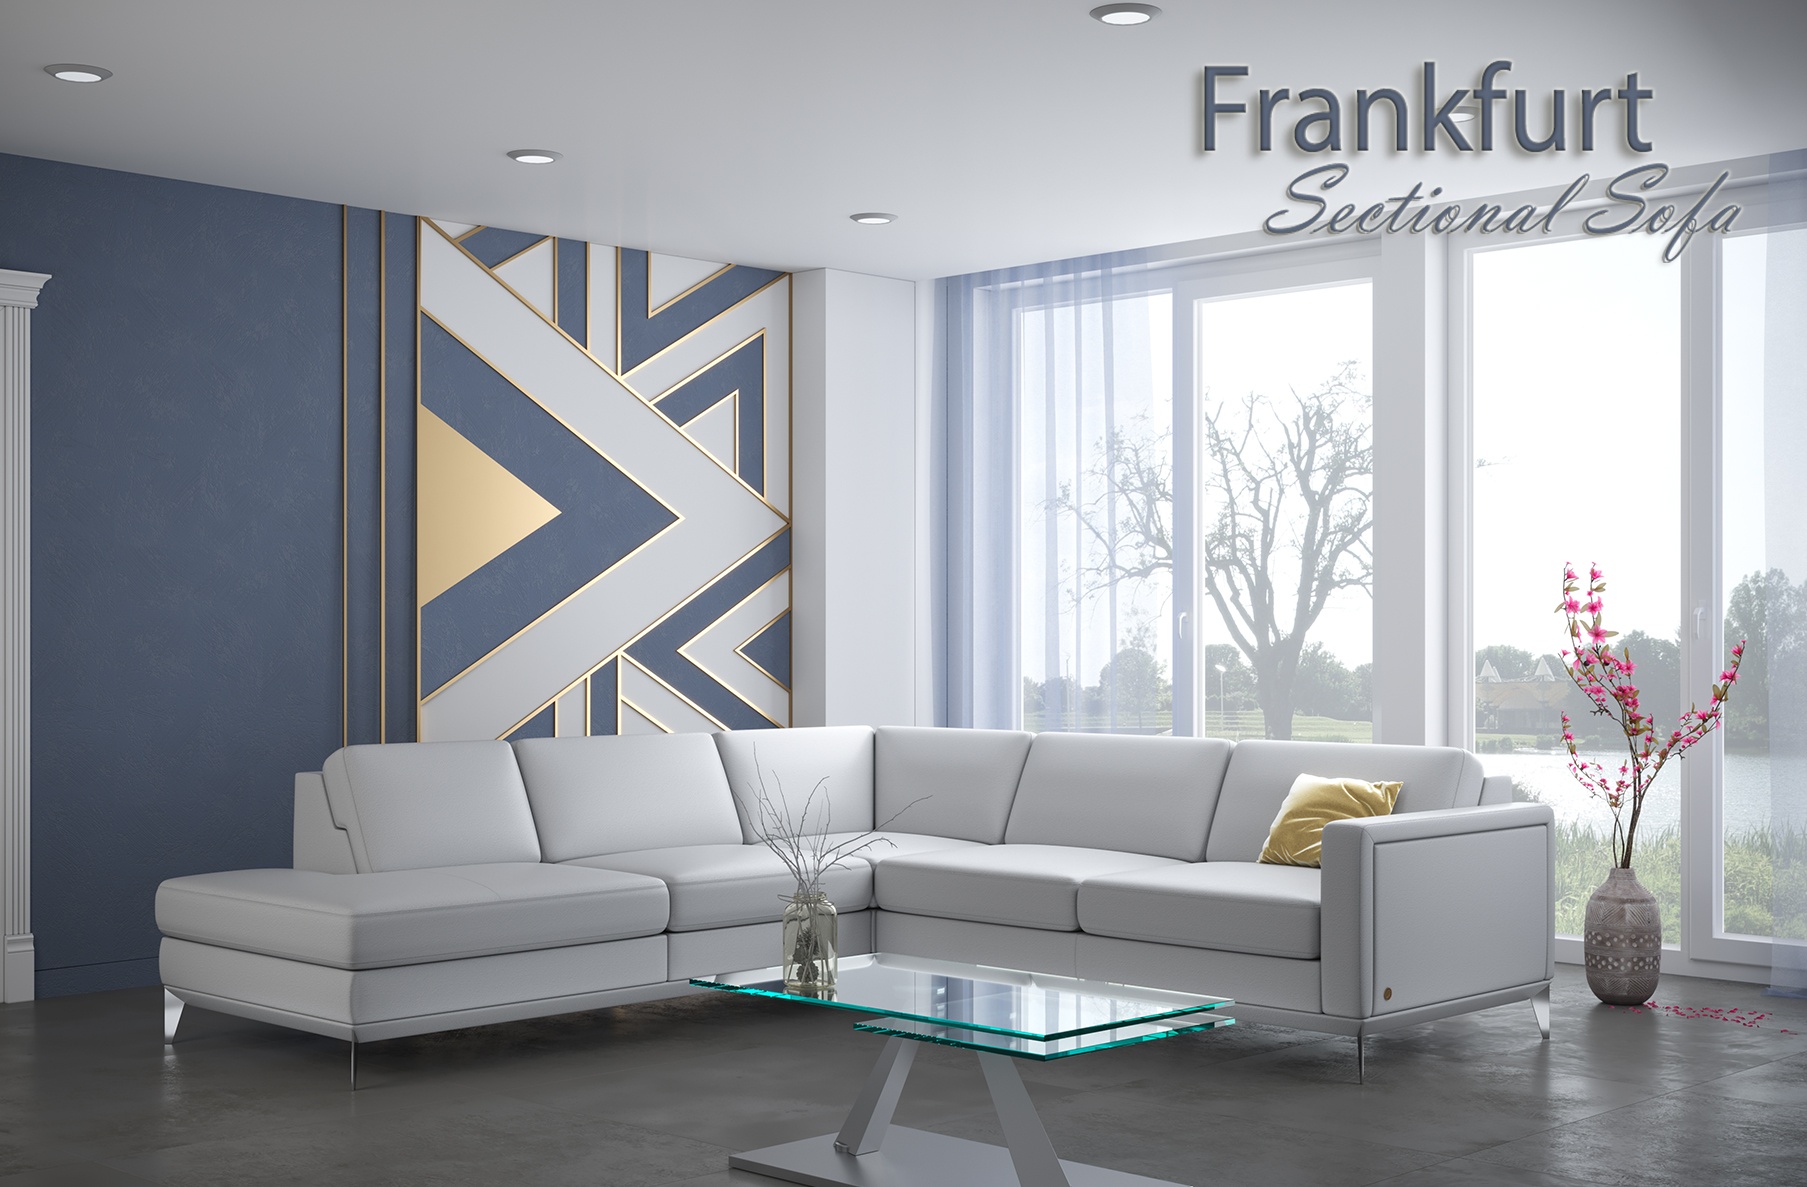 Frankfurt Sectional Sofa, Cheap